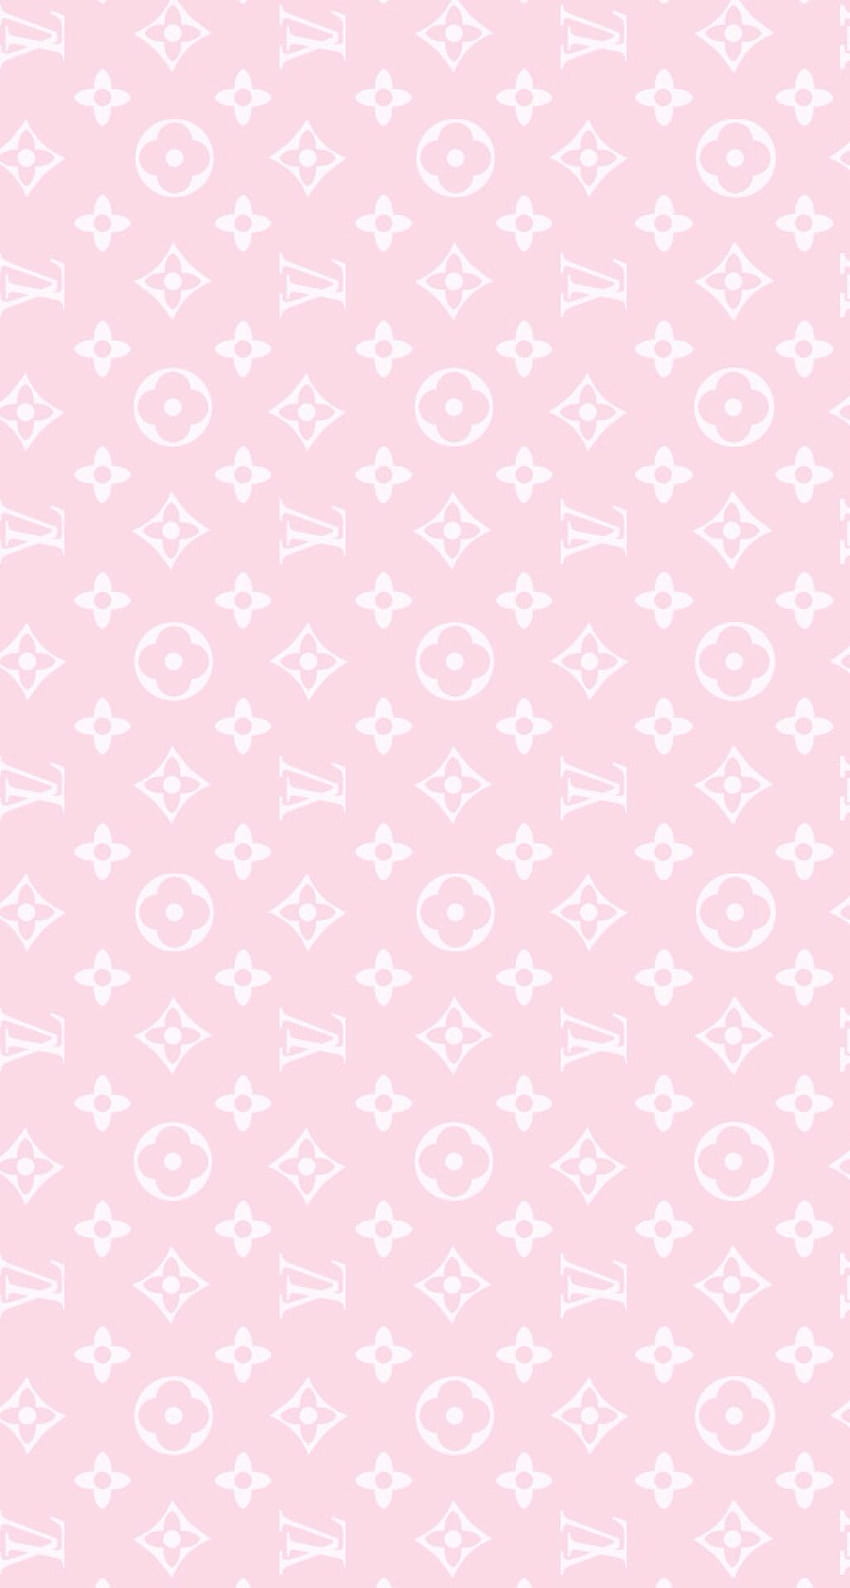 Louis vuitton pattern in pink - Louis Vuitton